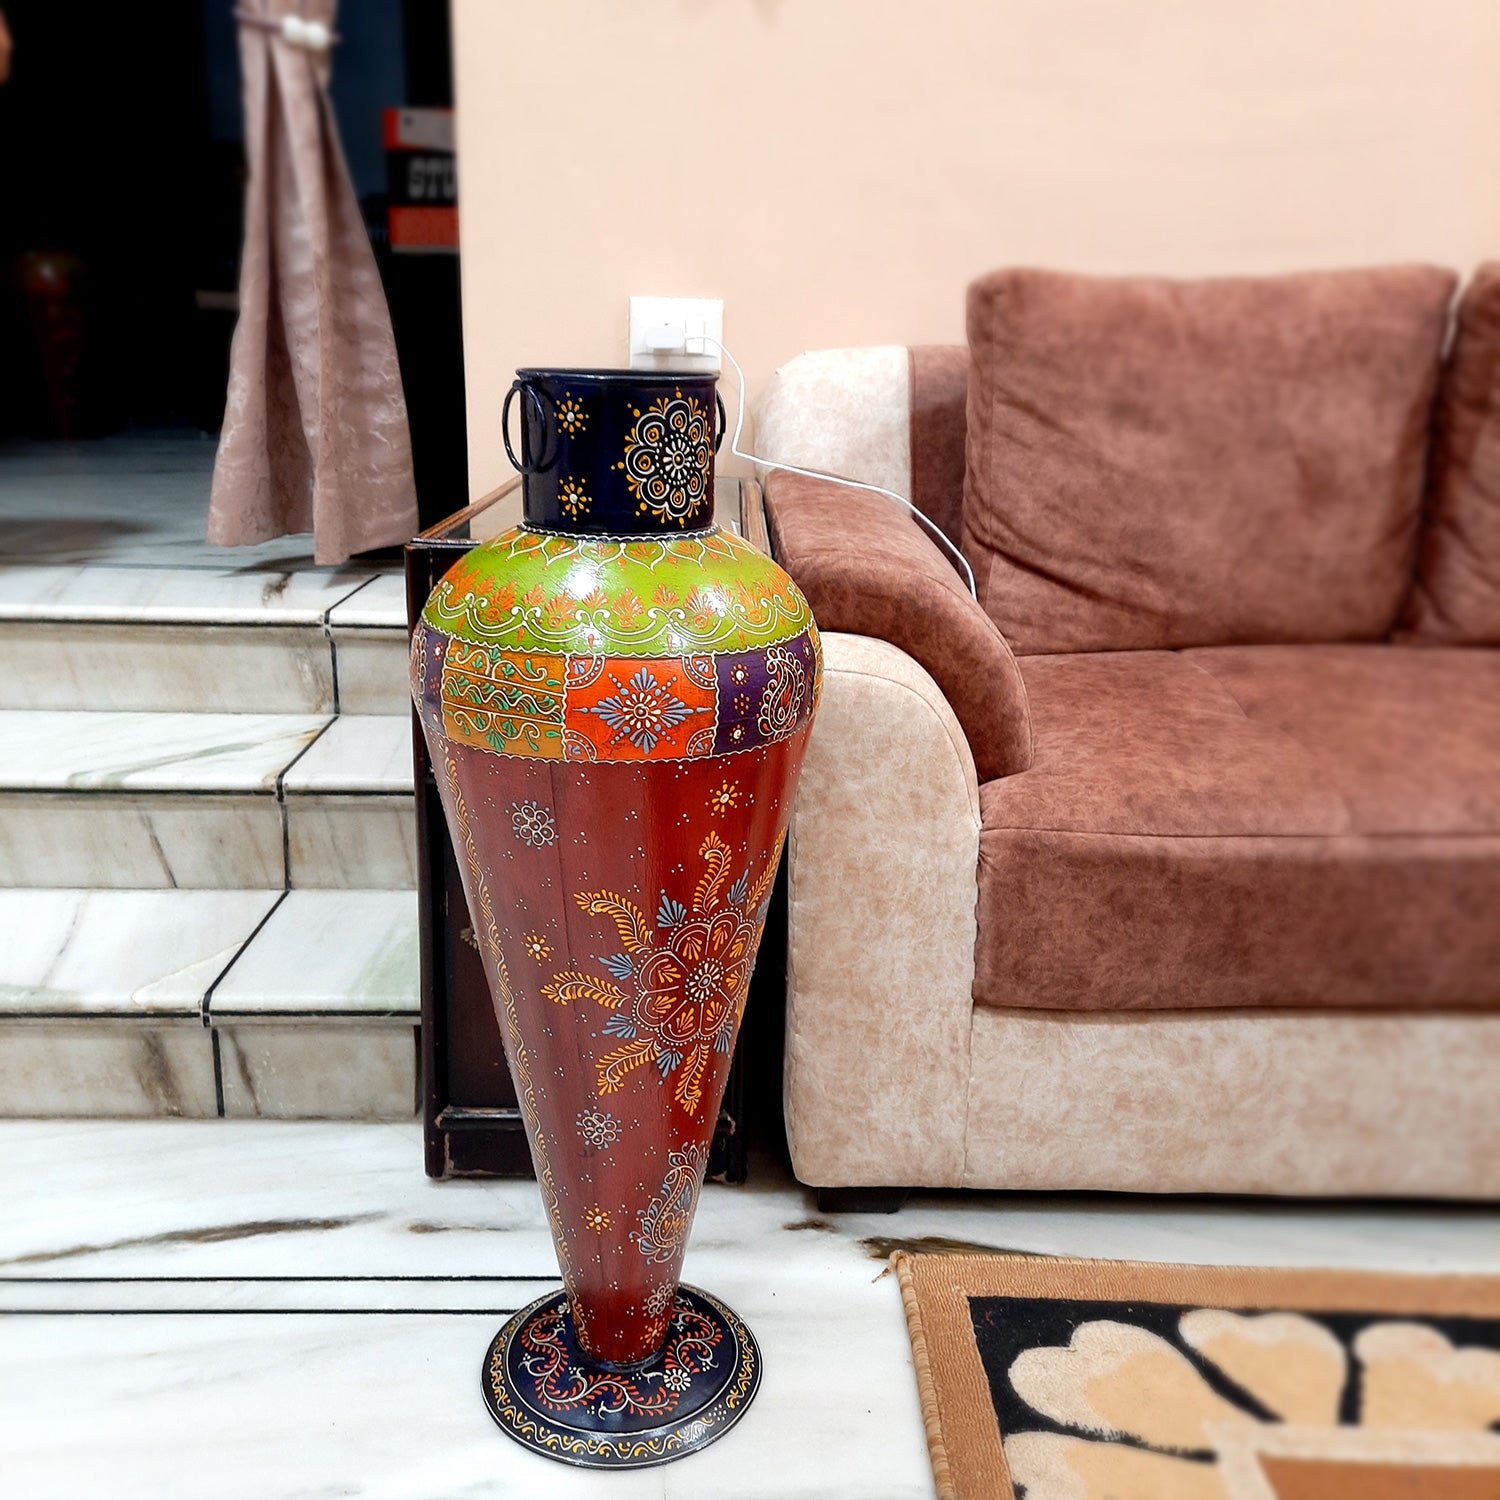 Flower Pot | Decorative Vases - For Home & Table decor - 31 Inch- Apkamart